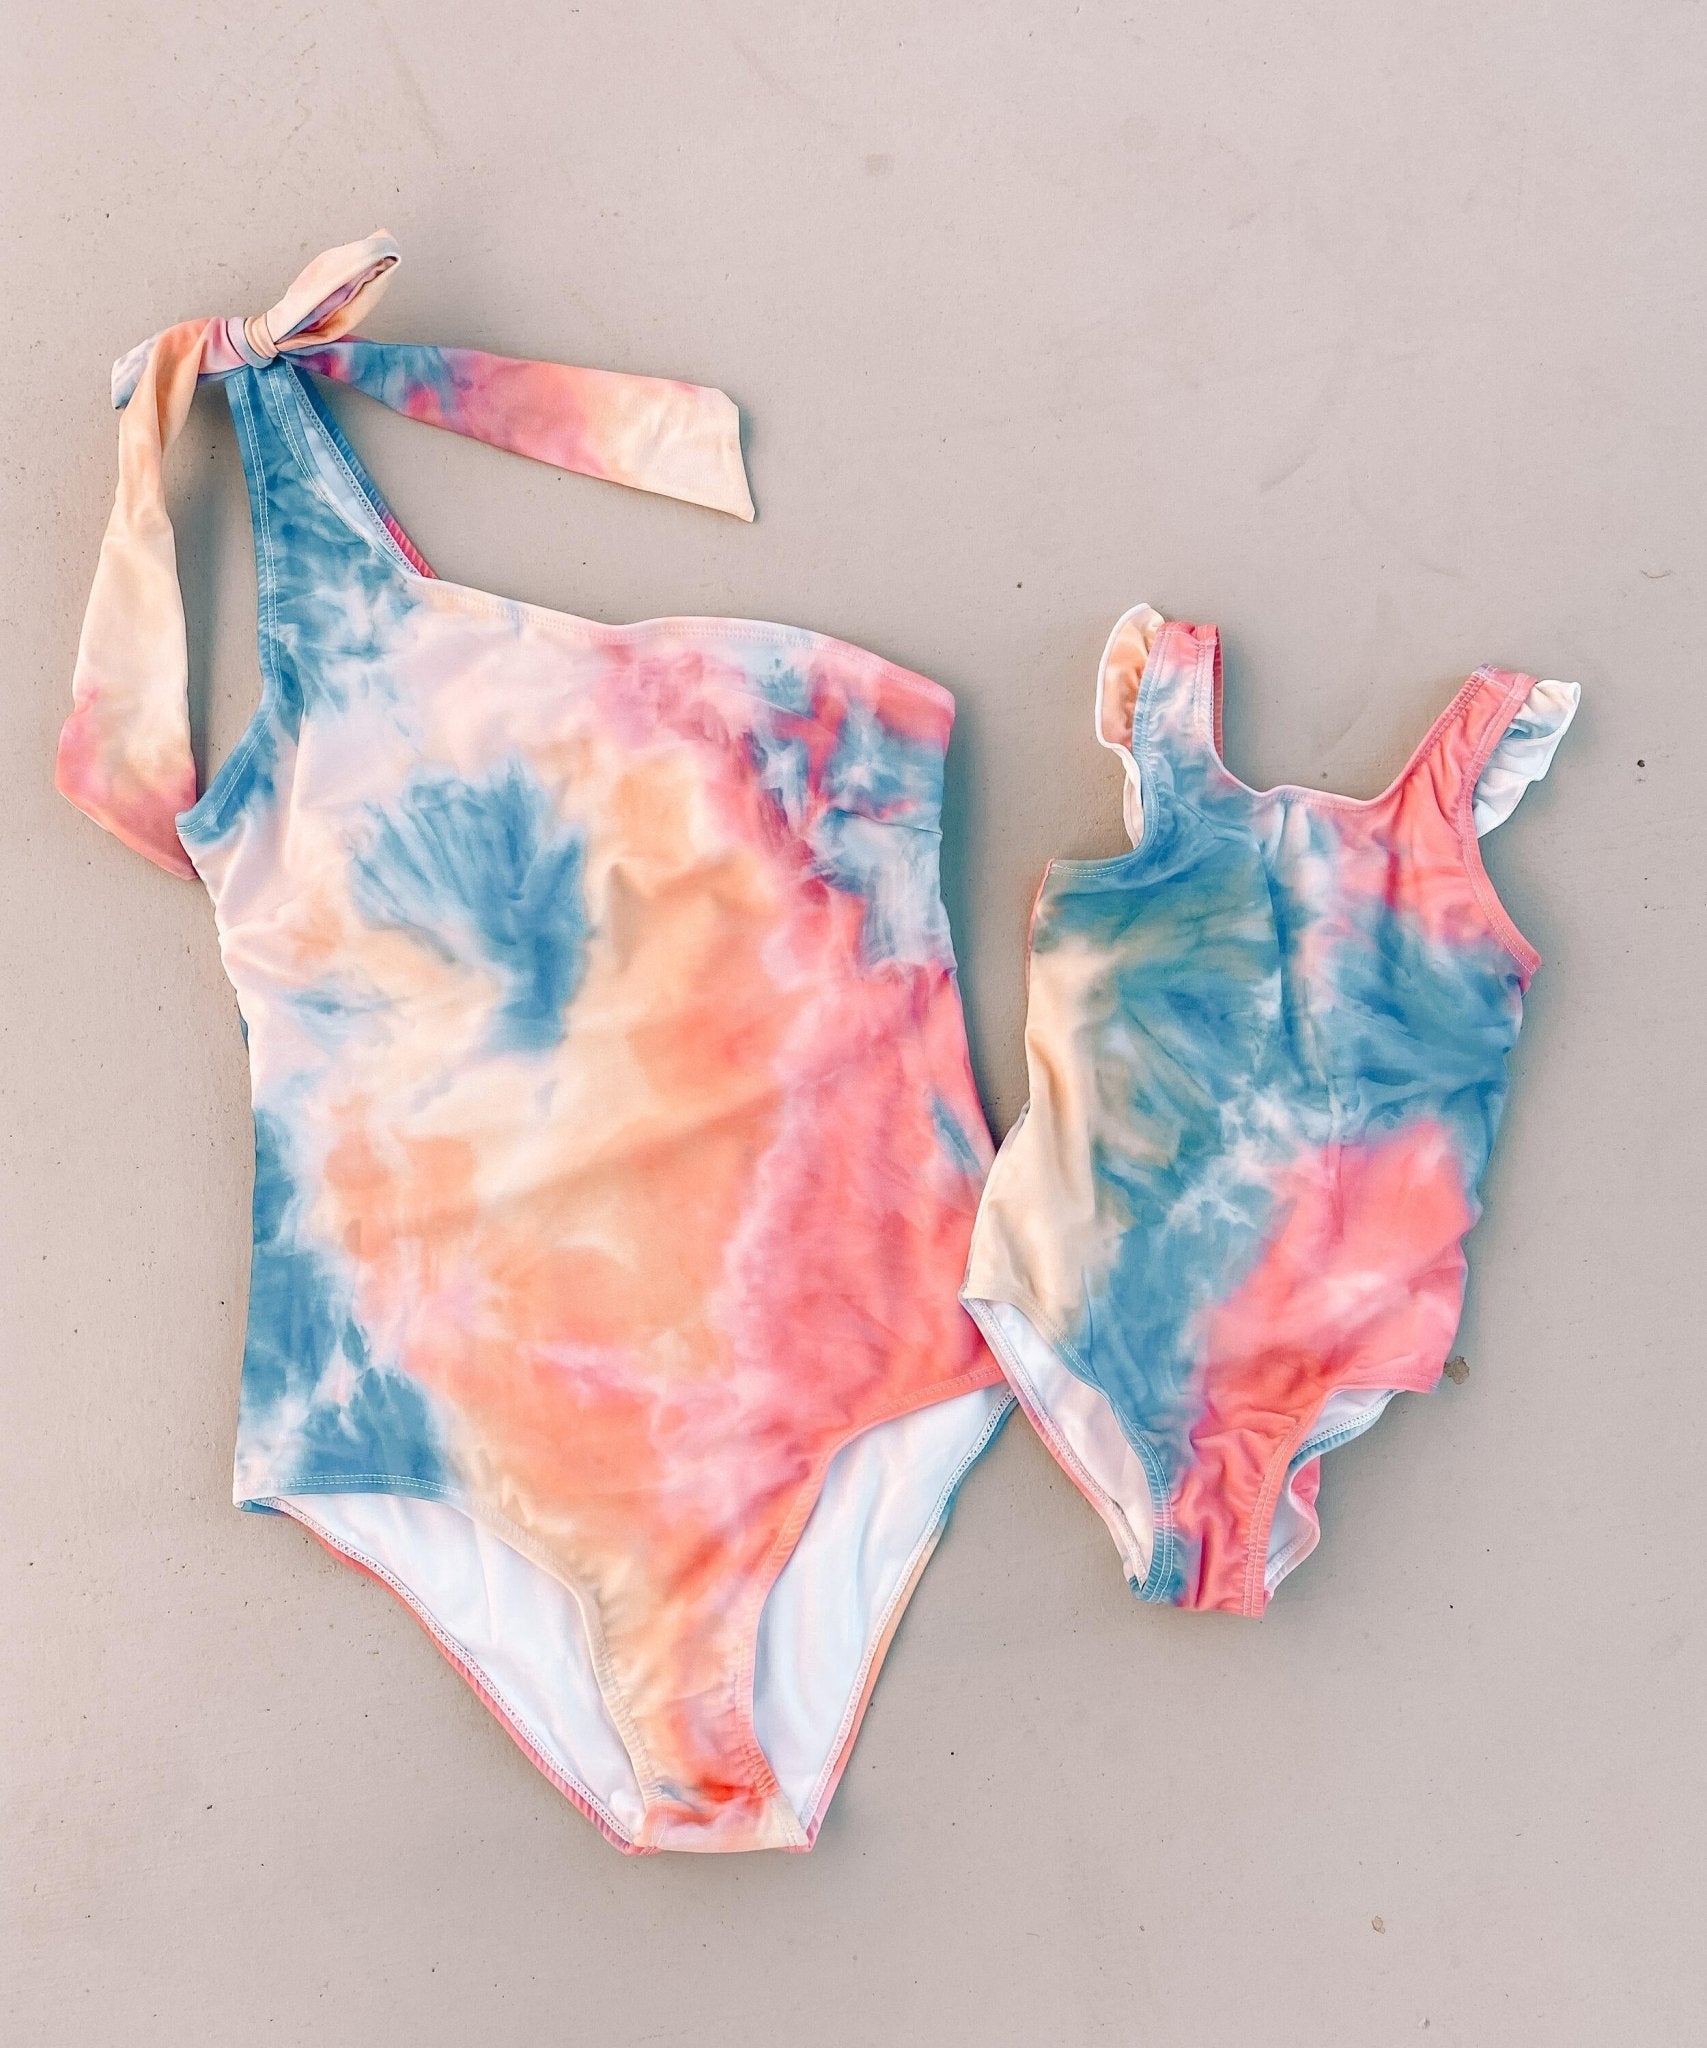 B Johnson Tye Dye Multi Colored Girls Bathing Suit Swimware